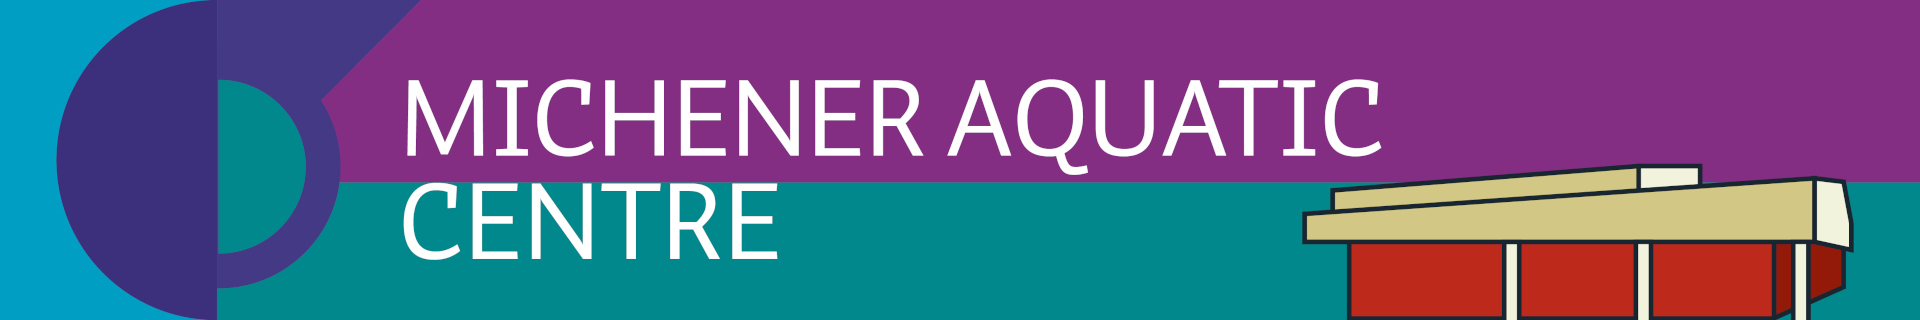 Michener Aquatic Centre Banner Image